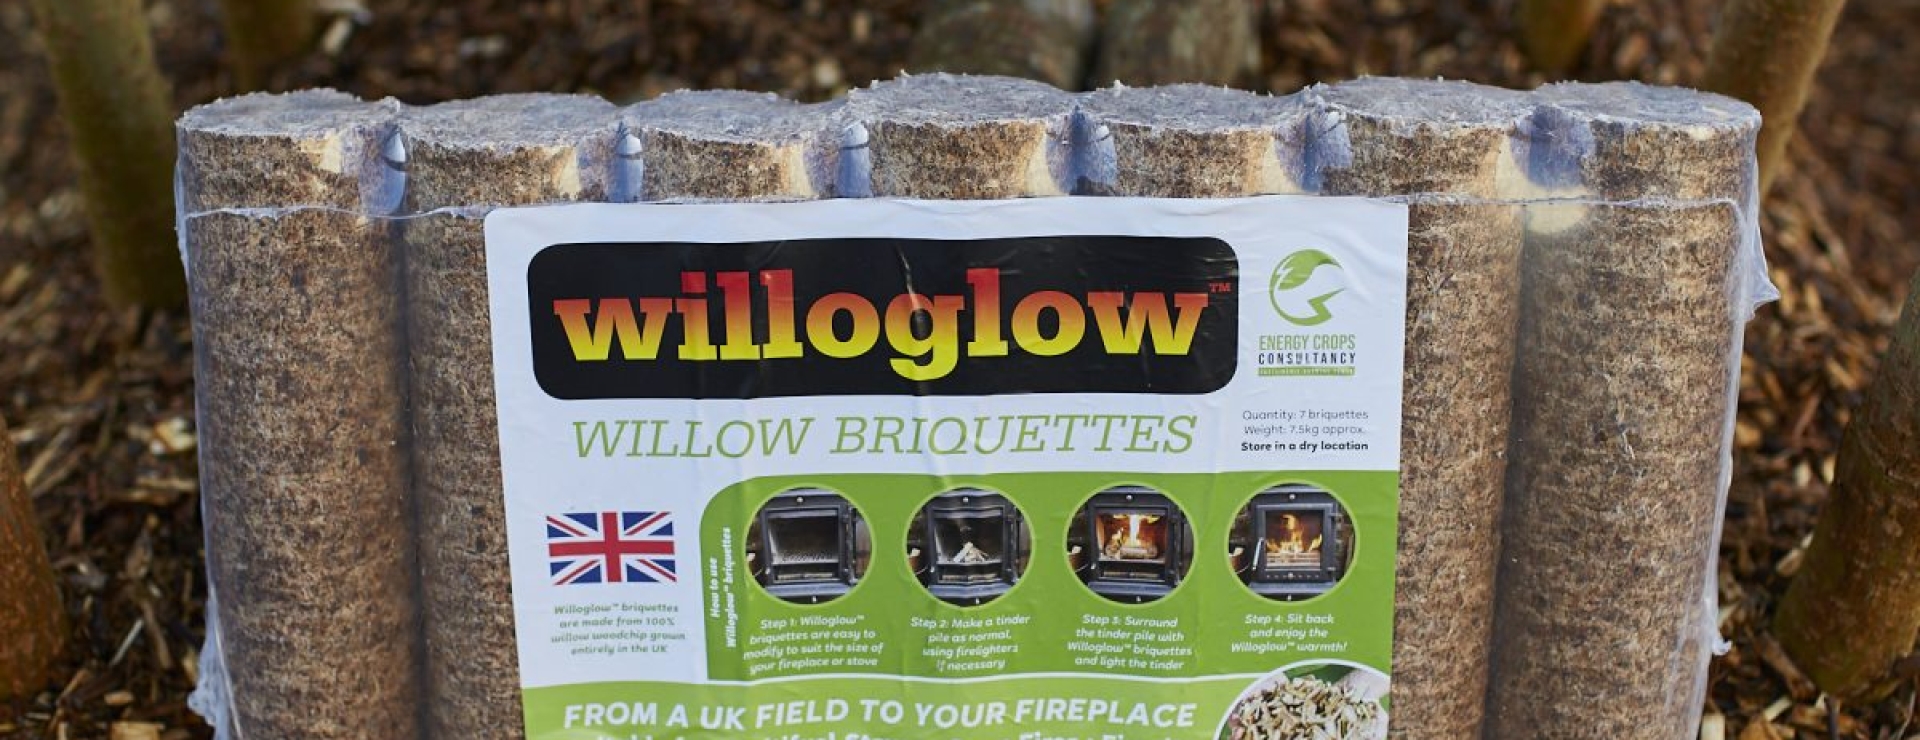 willowglow briquettes available to purchase through Stourton estates alternative to logs